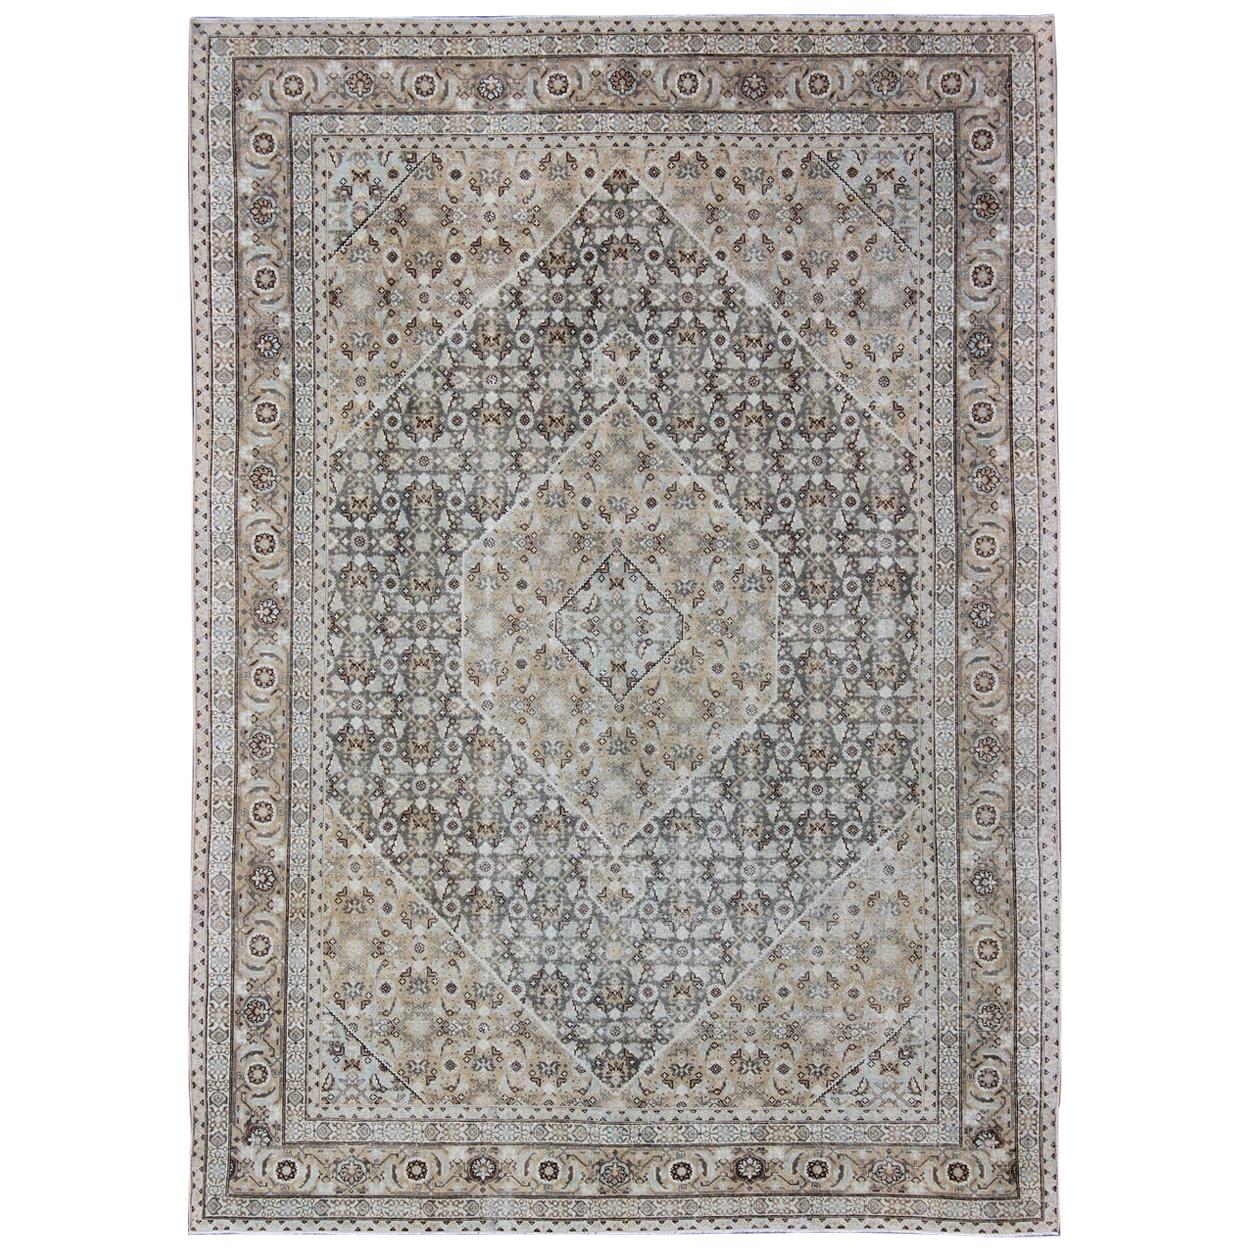 Antique Persian Tabriz Carpet with Geometric Diamond Design in Earth Tones